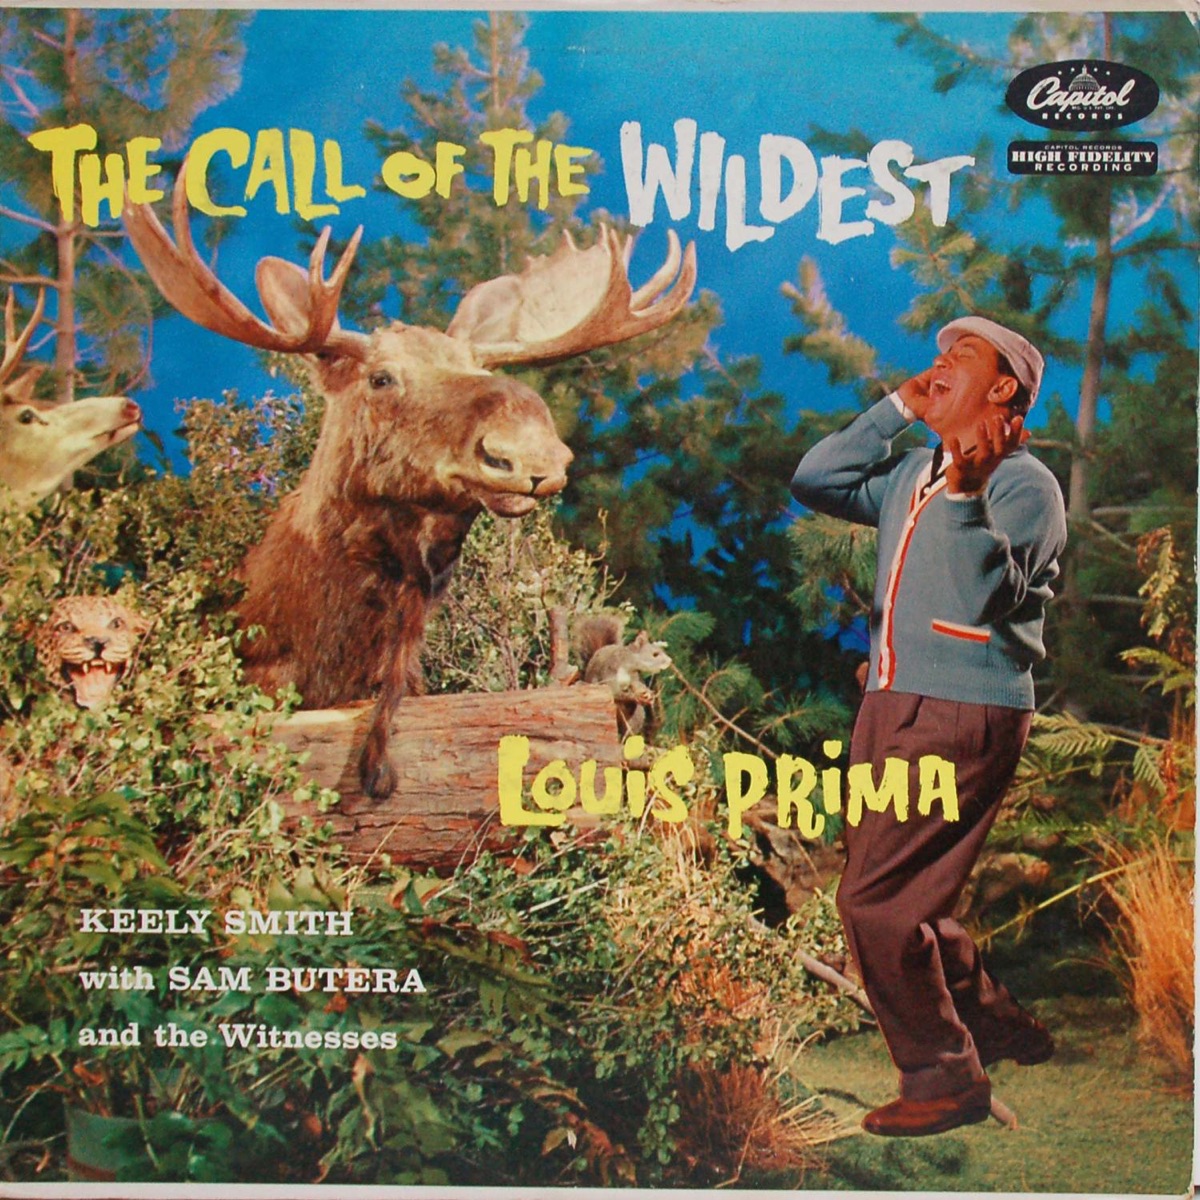 LOUIS PRIMA - CAPITOL COLLECTORS SERIES CD 26 TRACKS AMERICAN POP NEW!